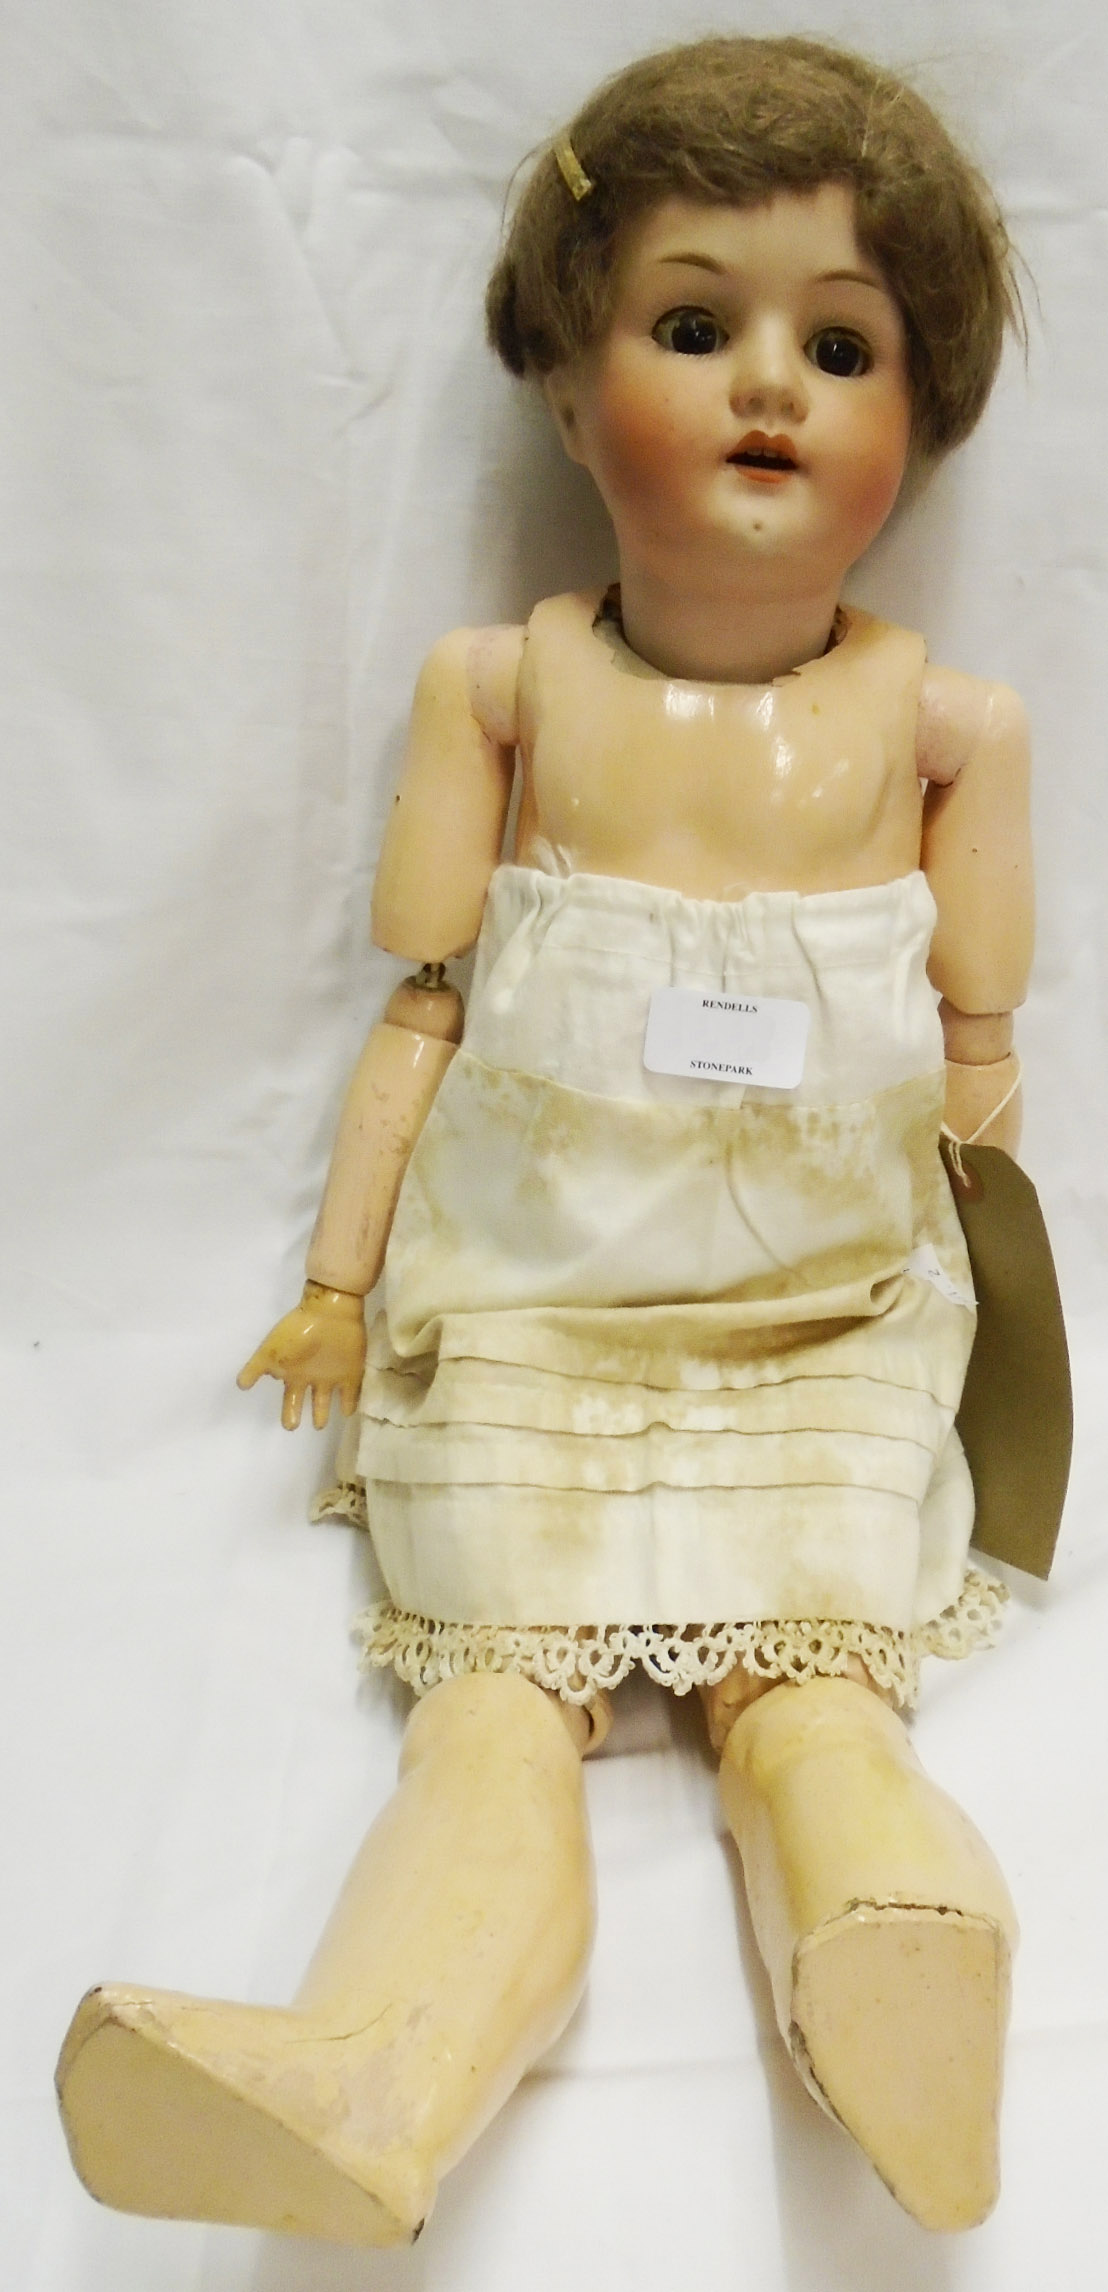 An early 20th Century Heubach Koppelsdorf 250-4 doll with sleeping eyes - a/f